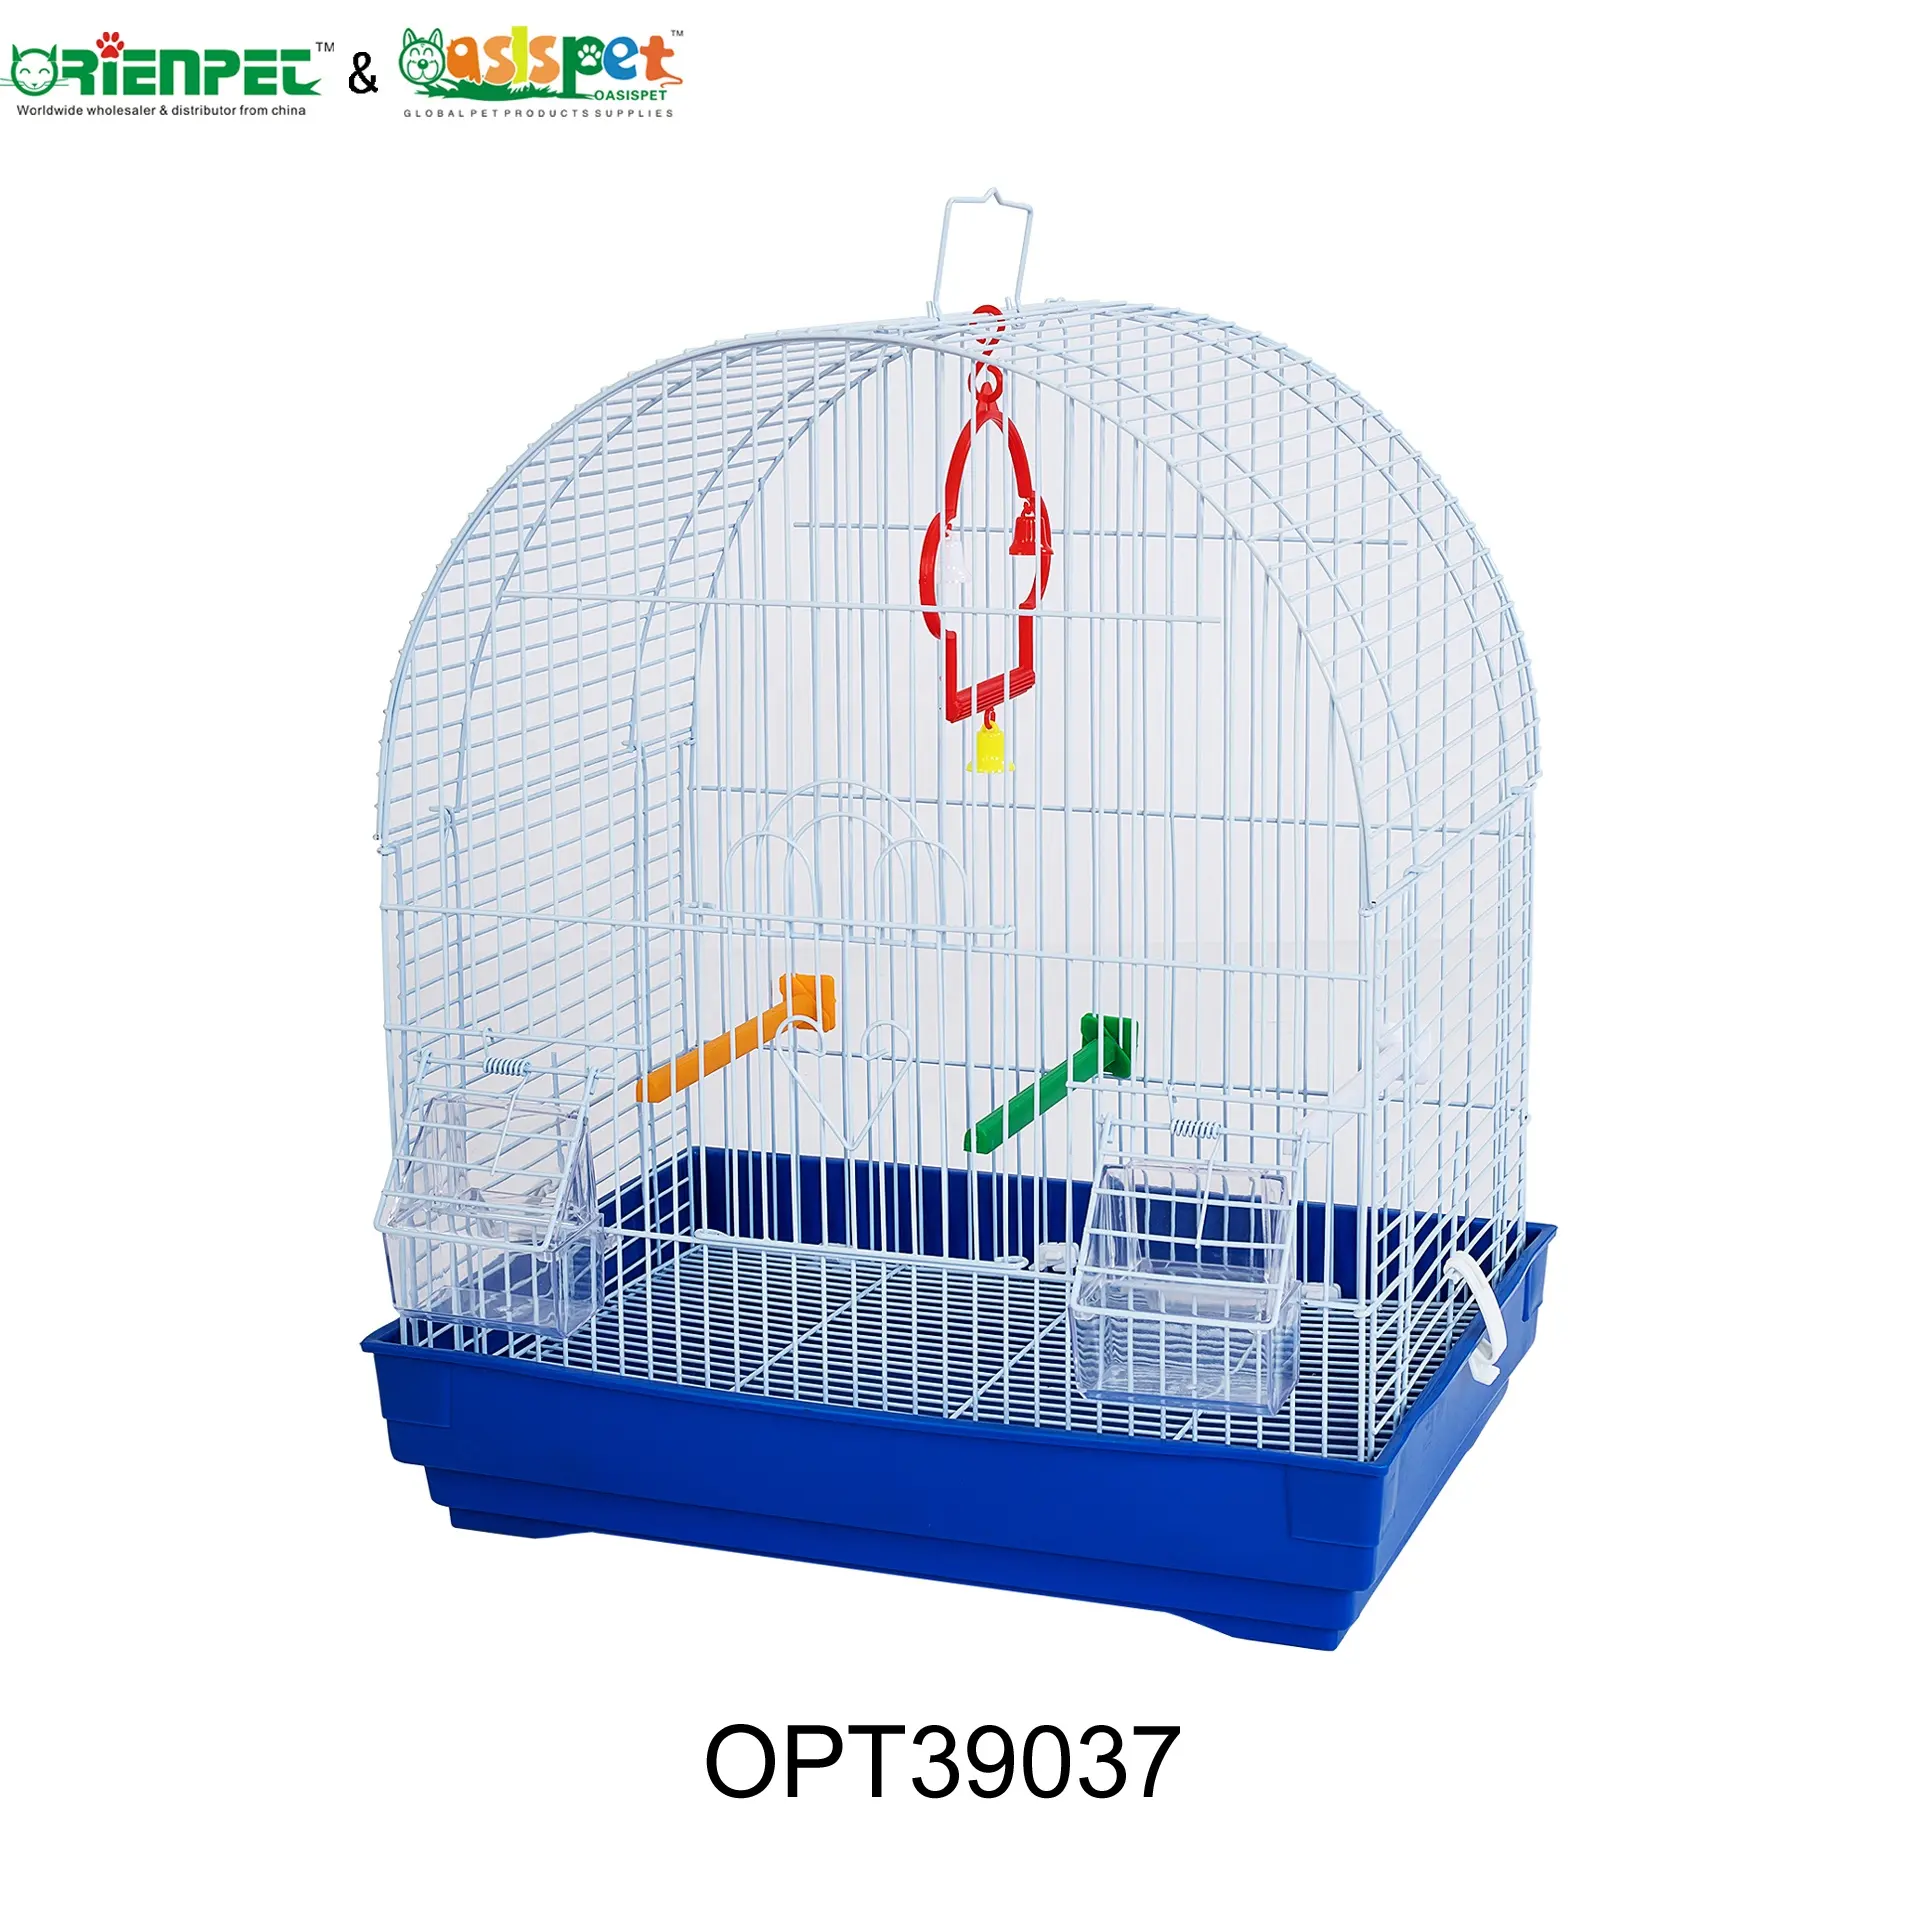 ORIENPET & OASISPET kawat hewan peliharaan kandang burung grosir stok tersedia OPT39037 produk burung peliharaan